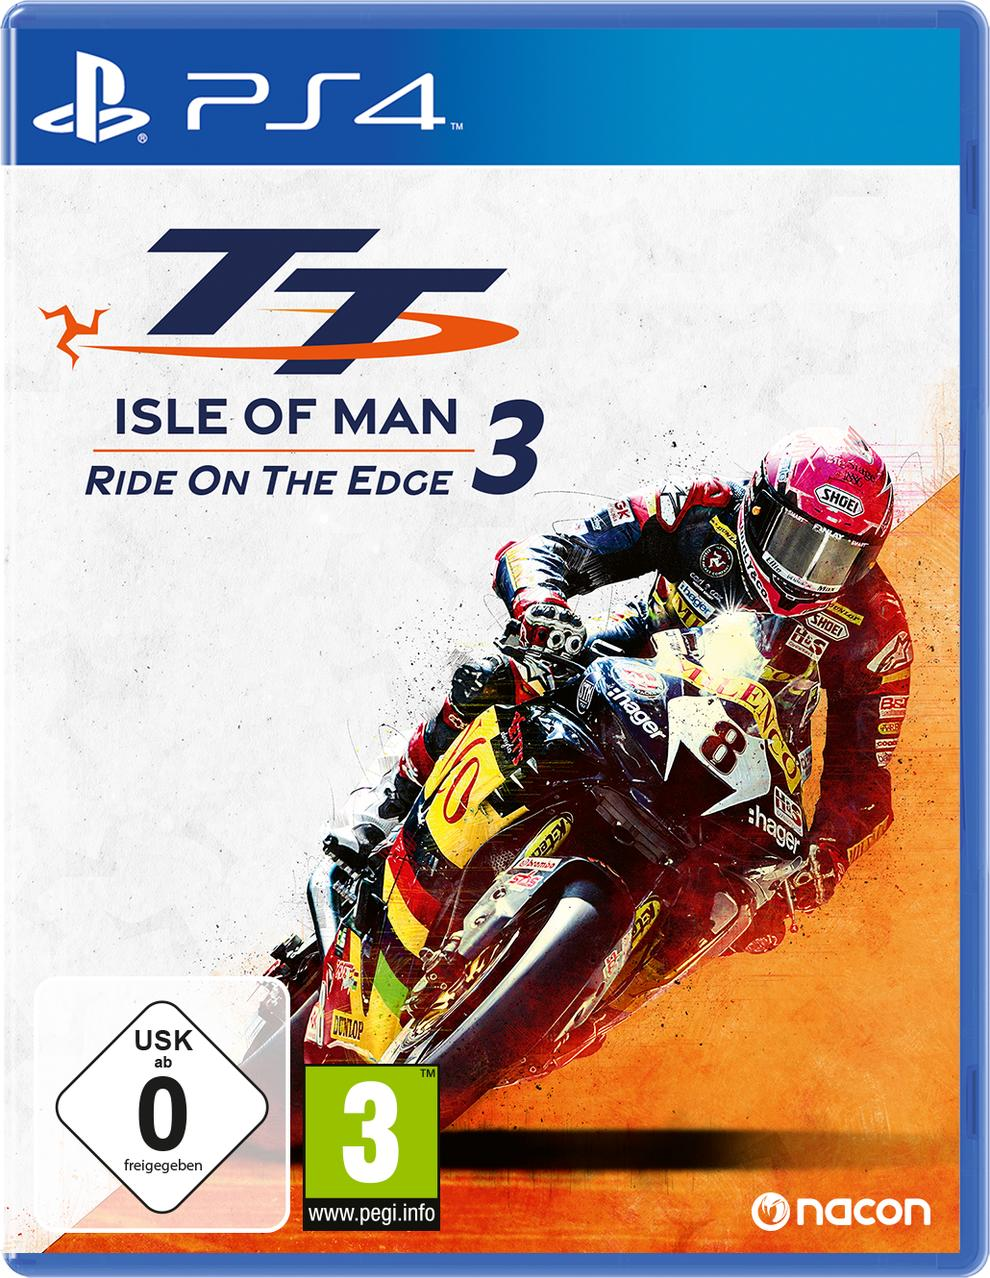 Man - TT Isle [PlayStation 3 - 4] of